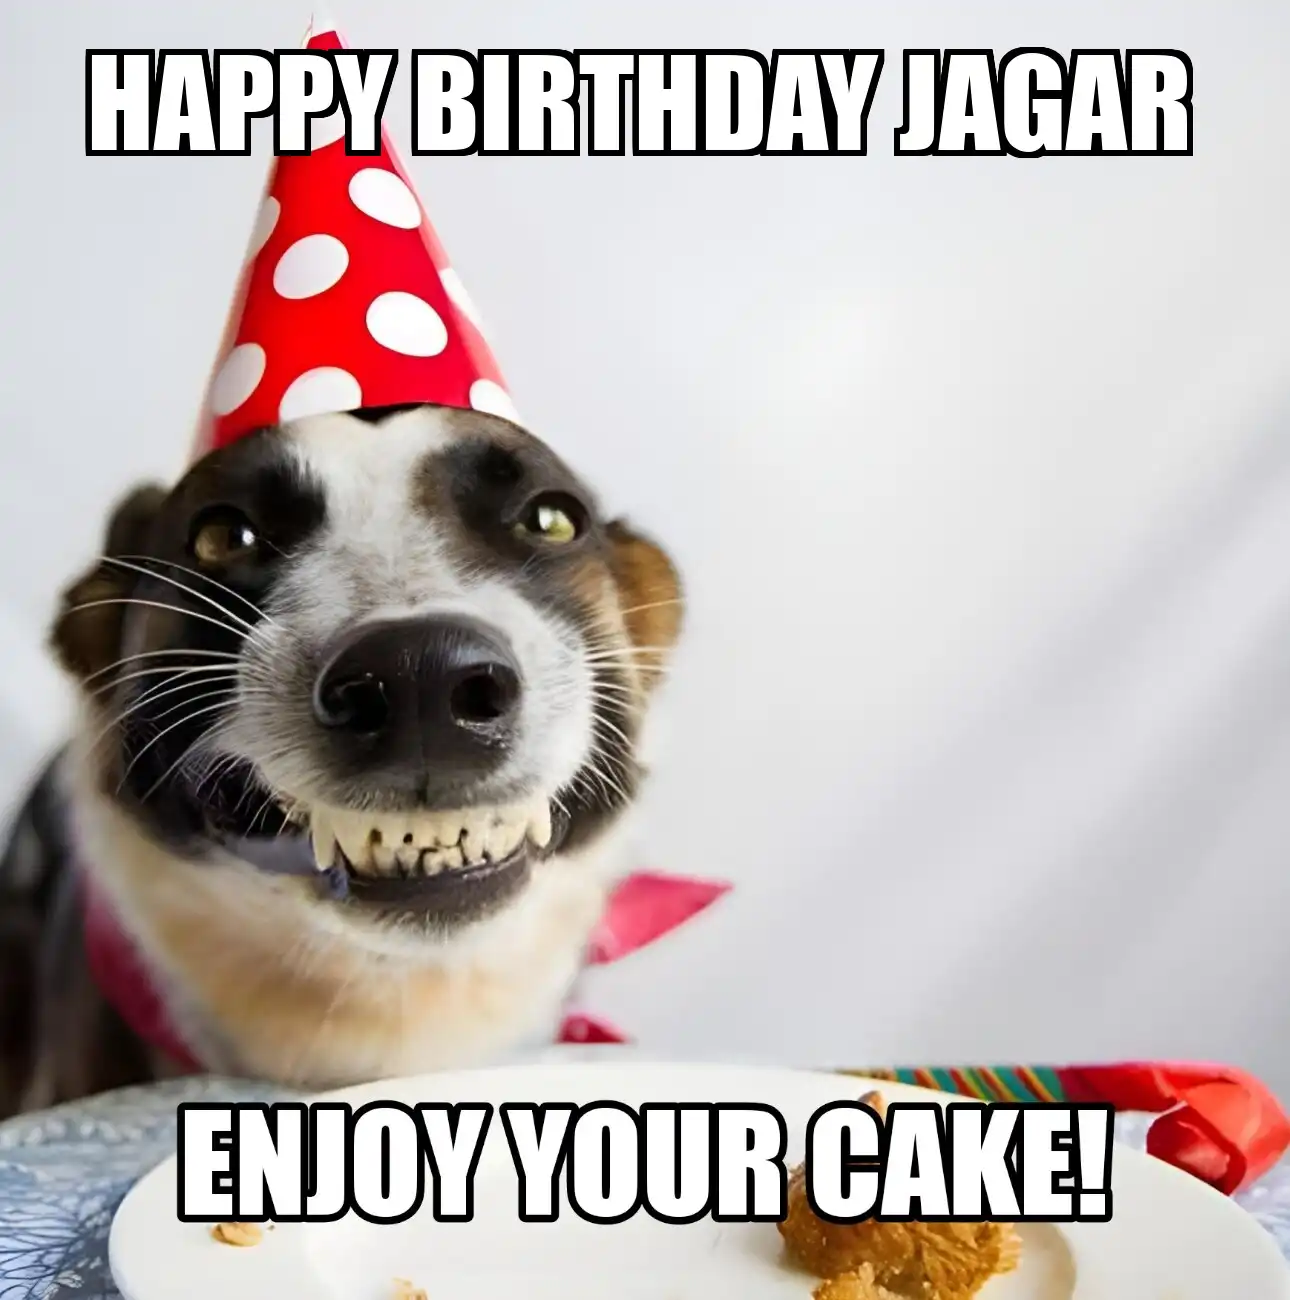 Happy Birthday Jagar Enjoy Your Cake Dog Meme